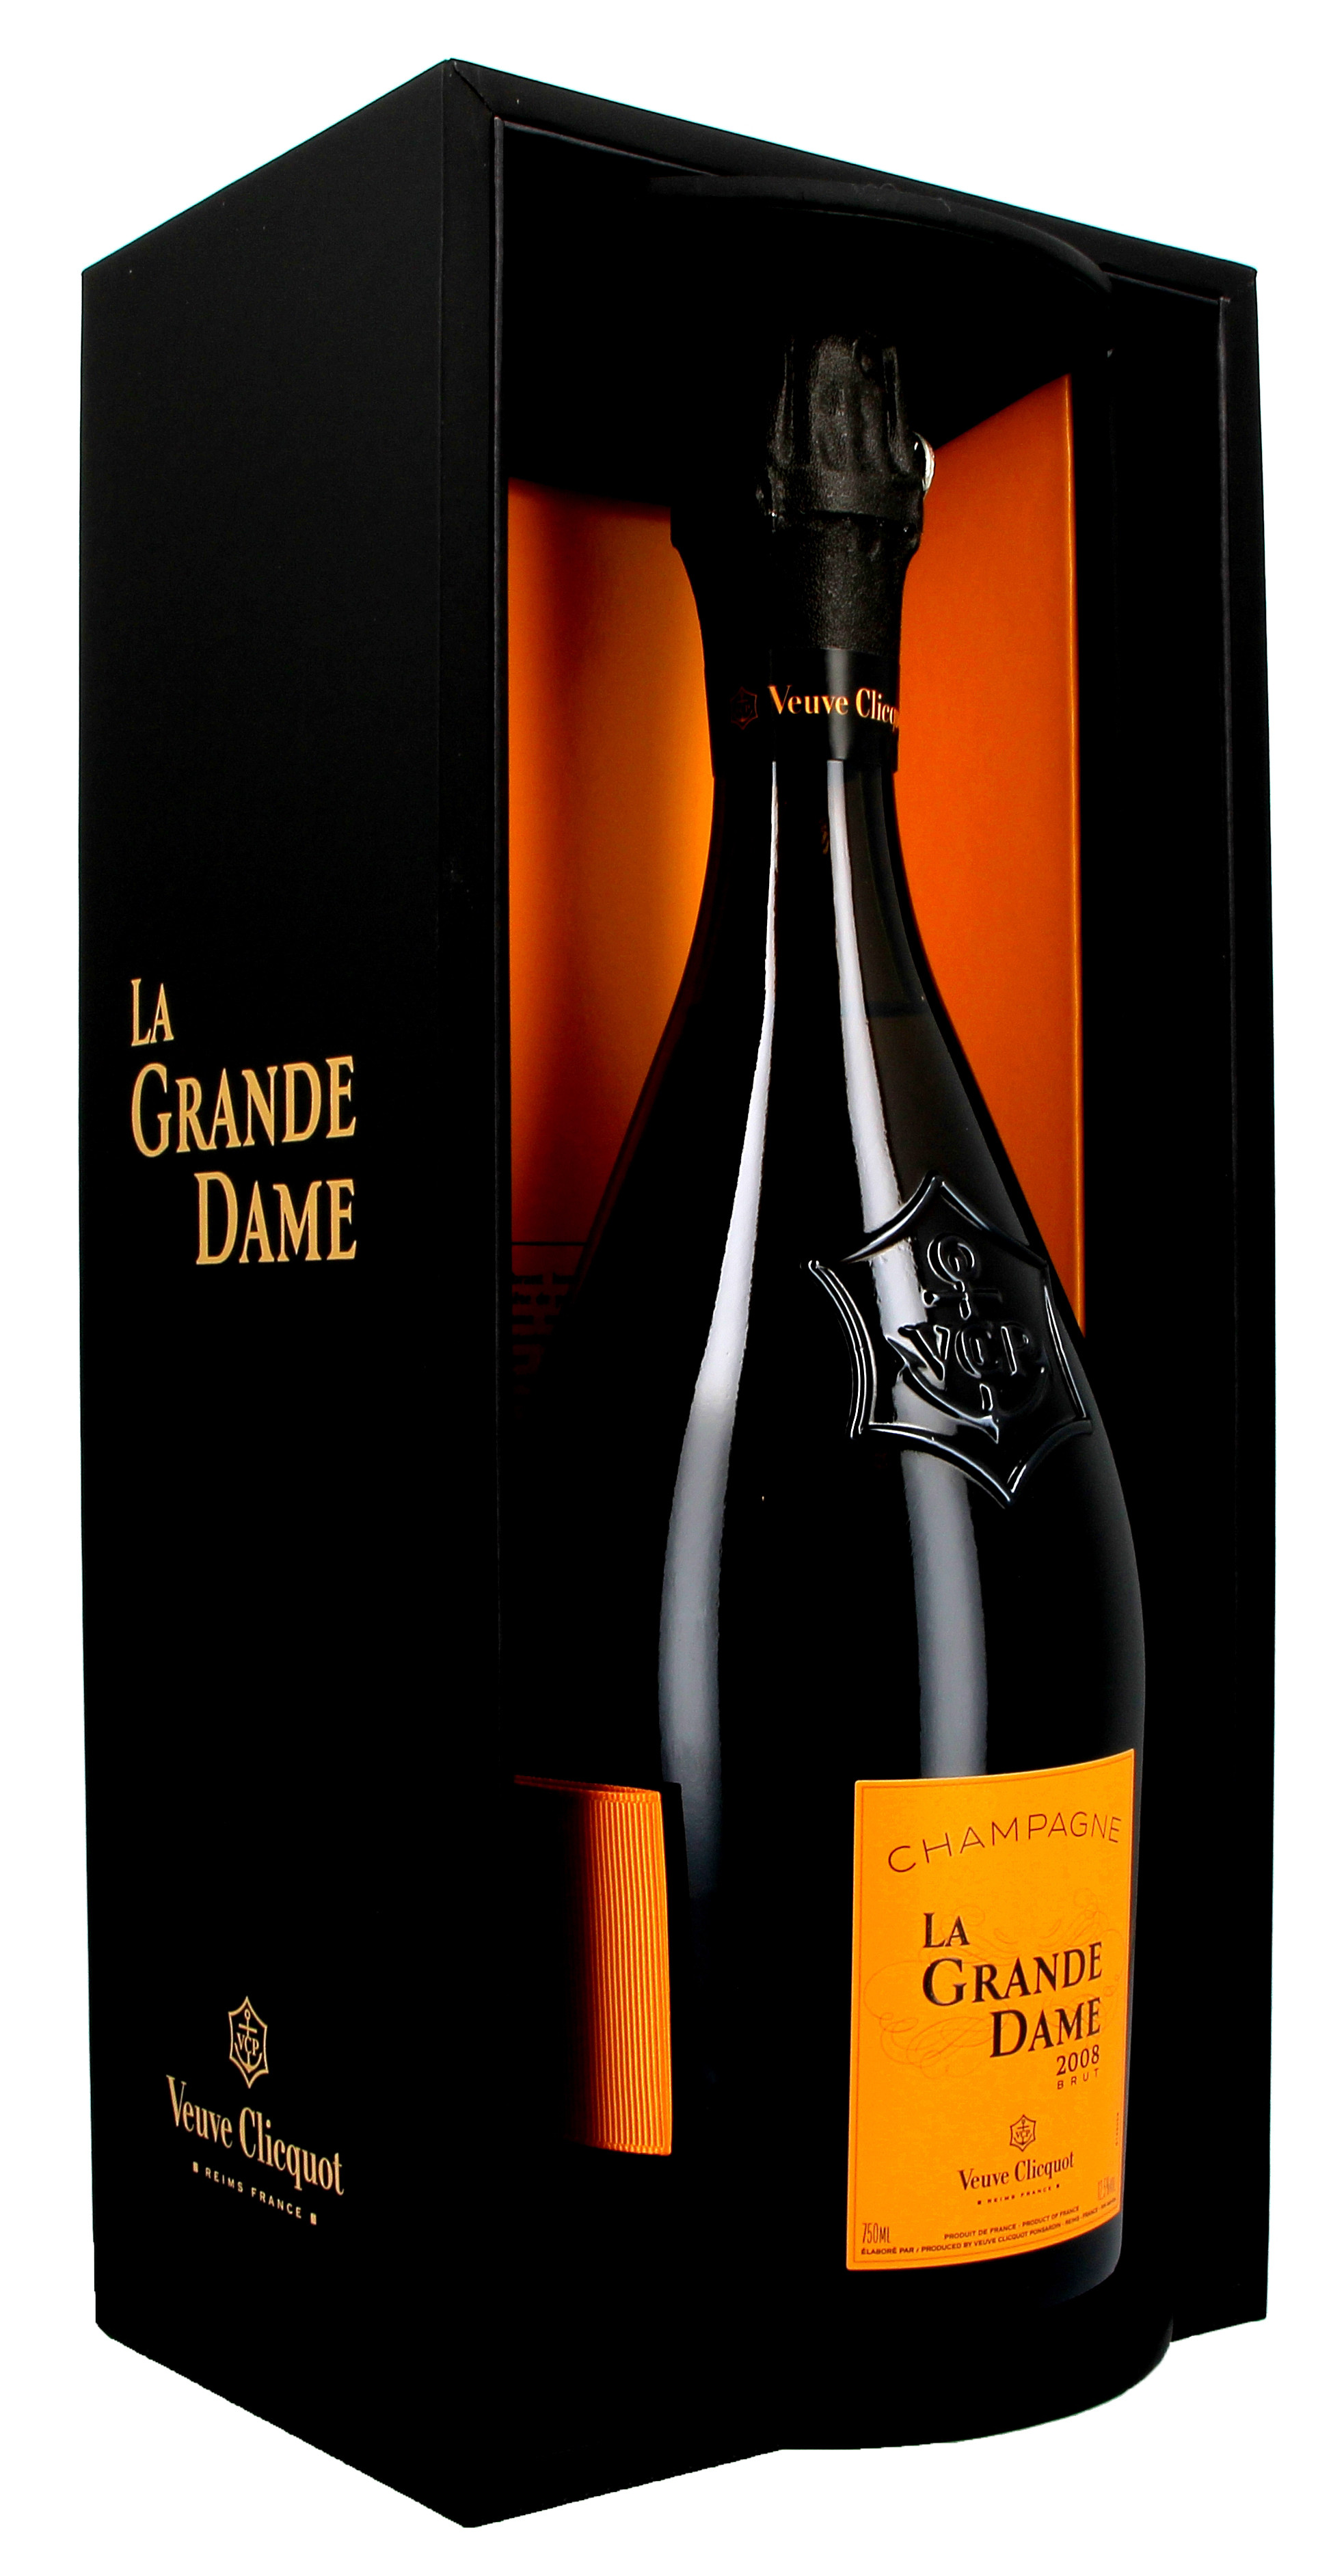 Champagne La Grande Dame 75cl 2008 Veuve Clicquot Ponsardin (Champagne)